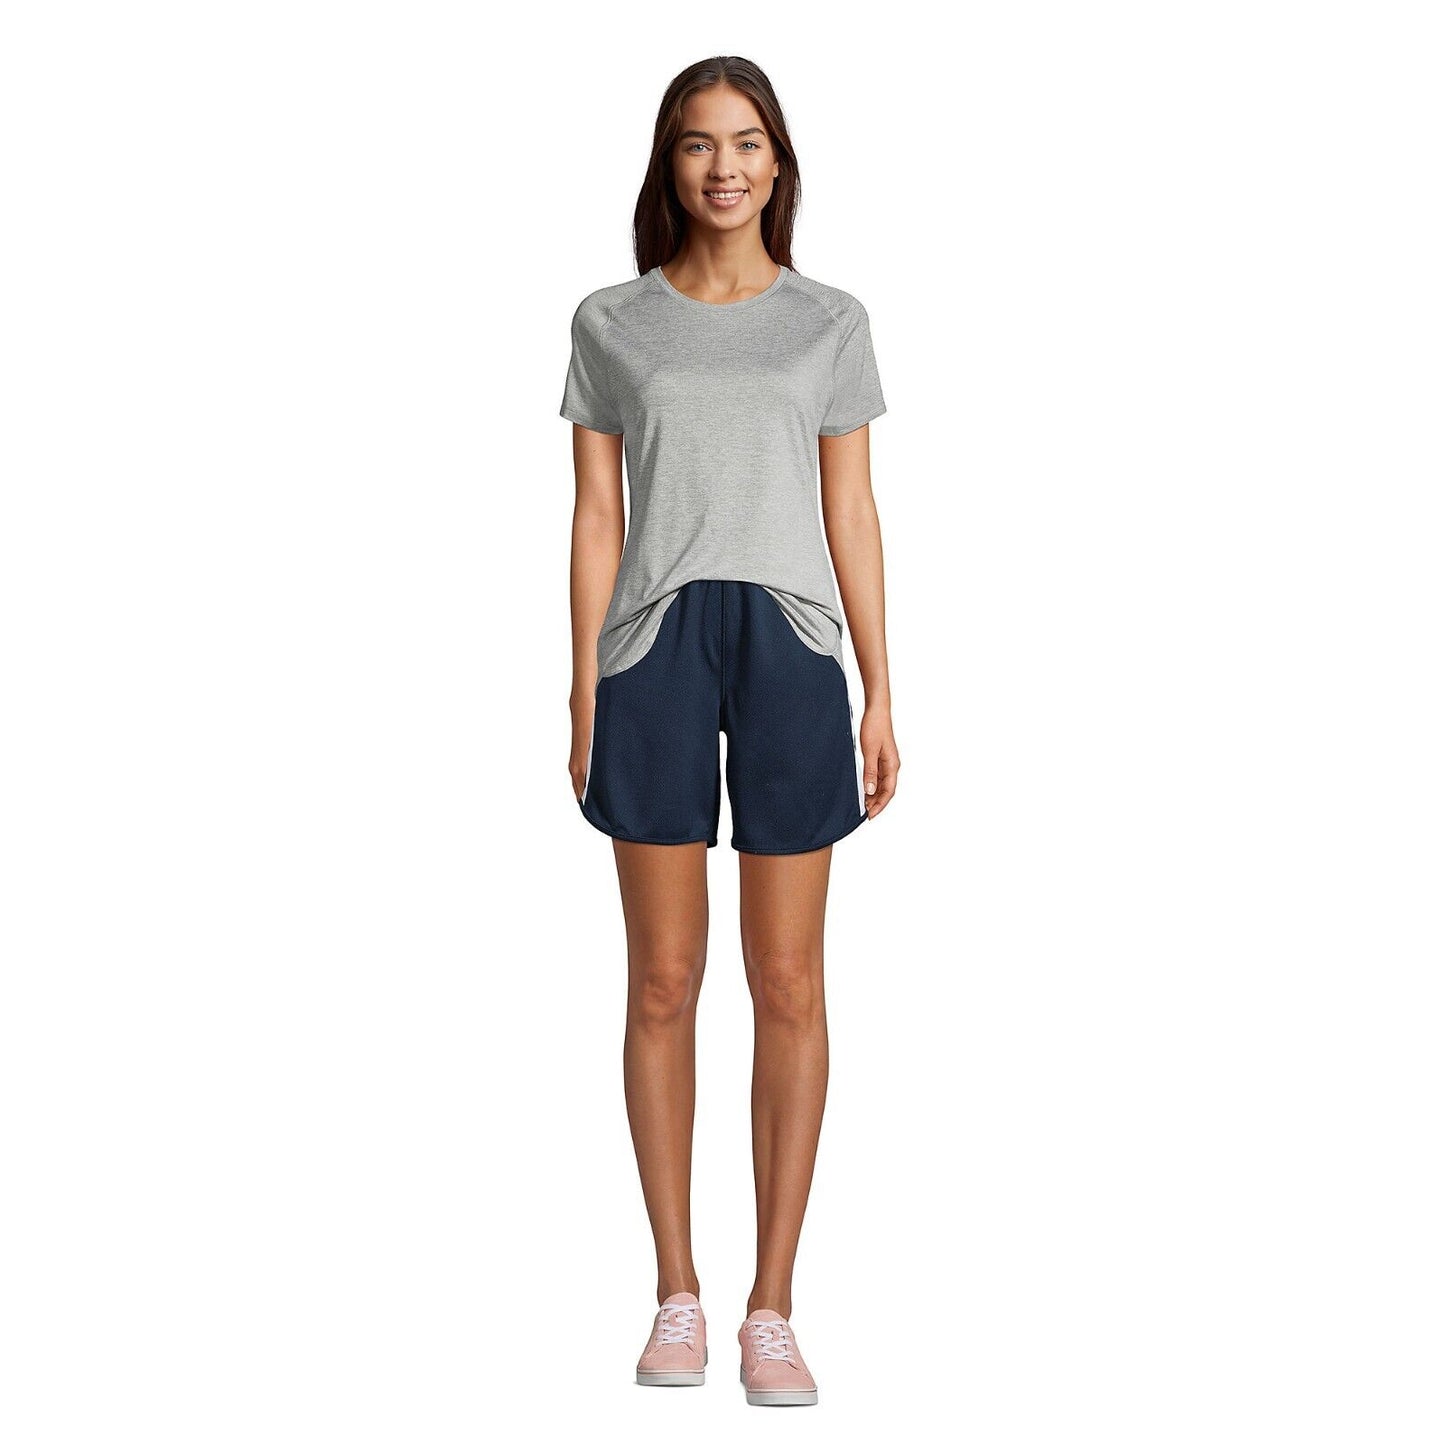 Women's Short Sleeve Active Gym T-shirt Size L